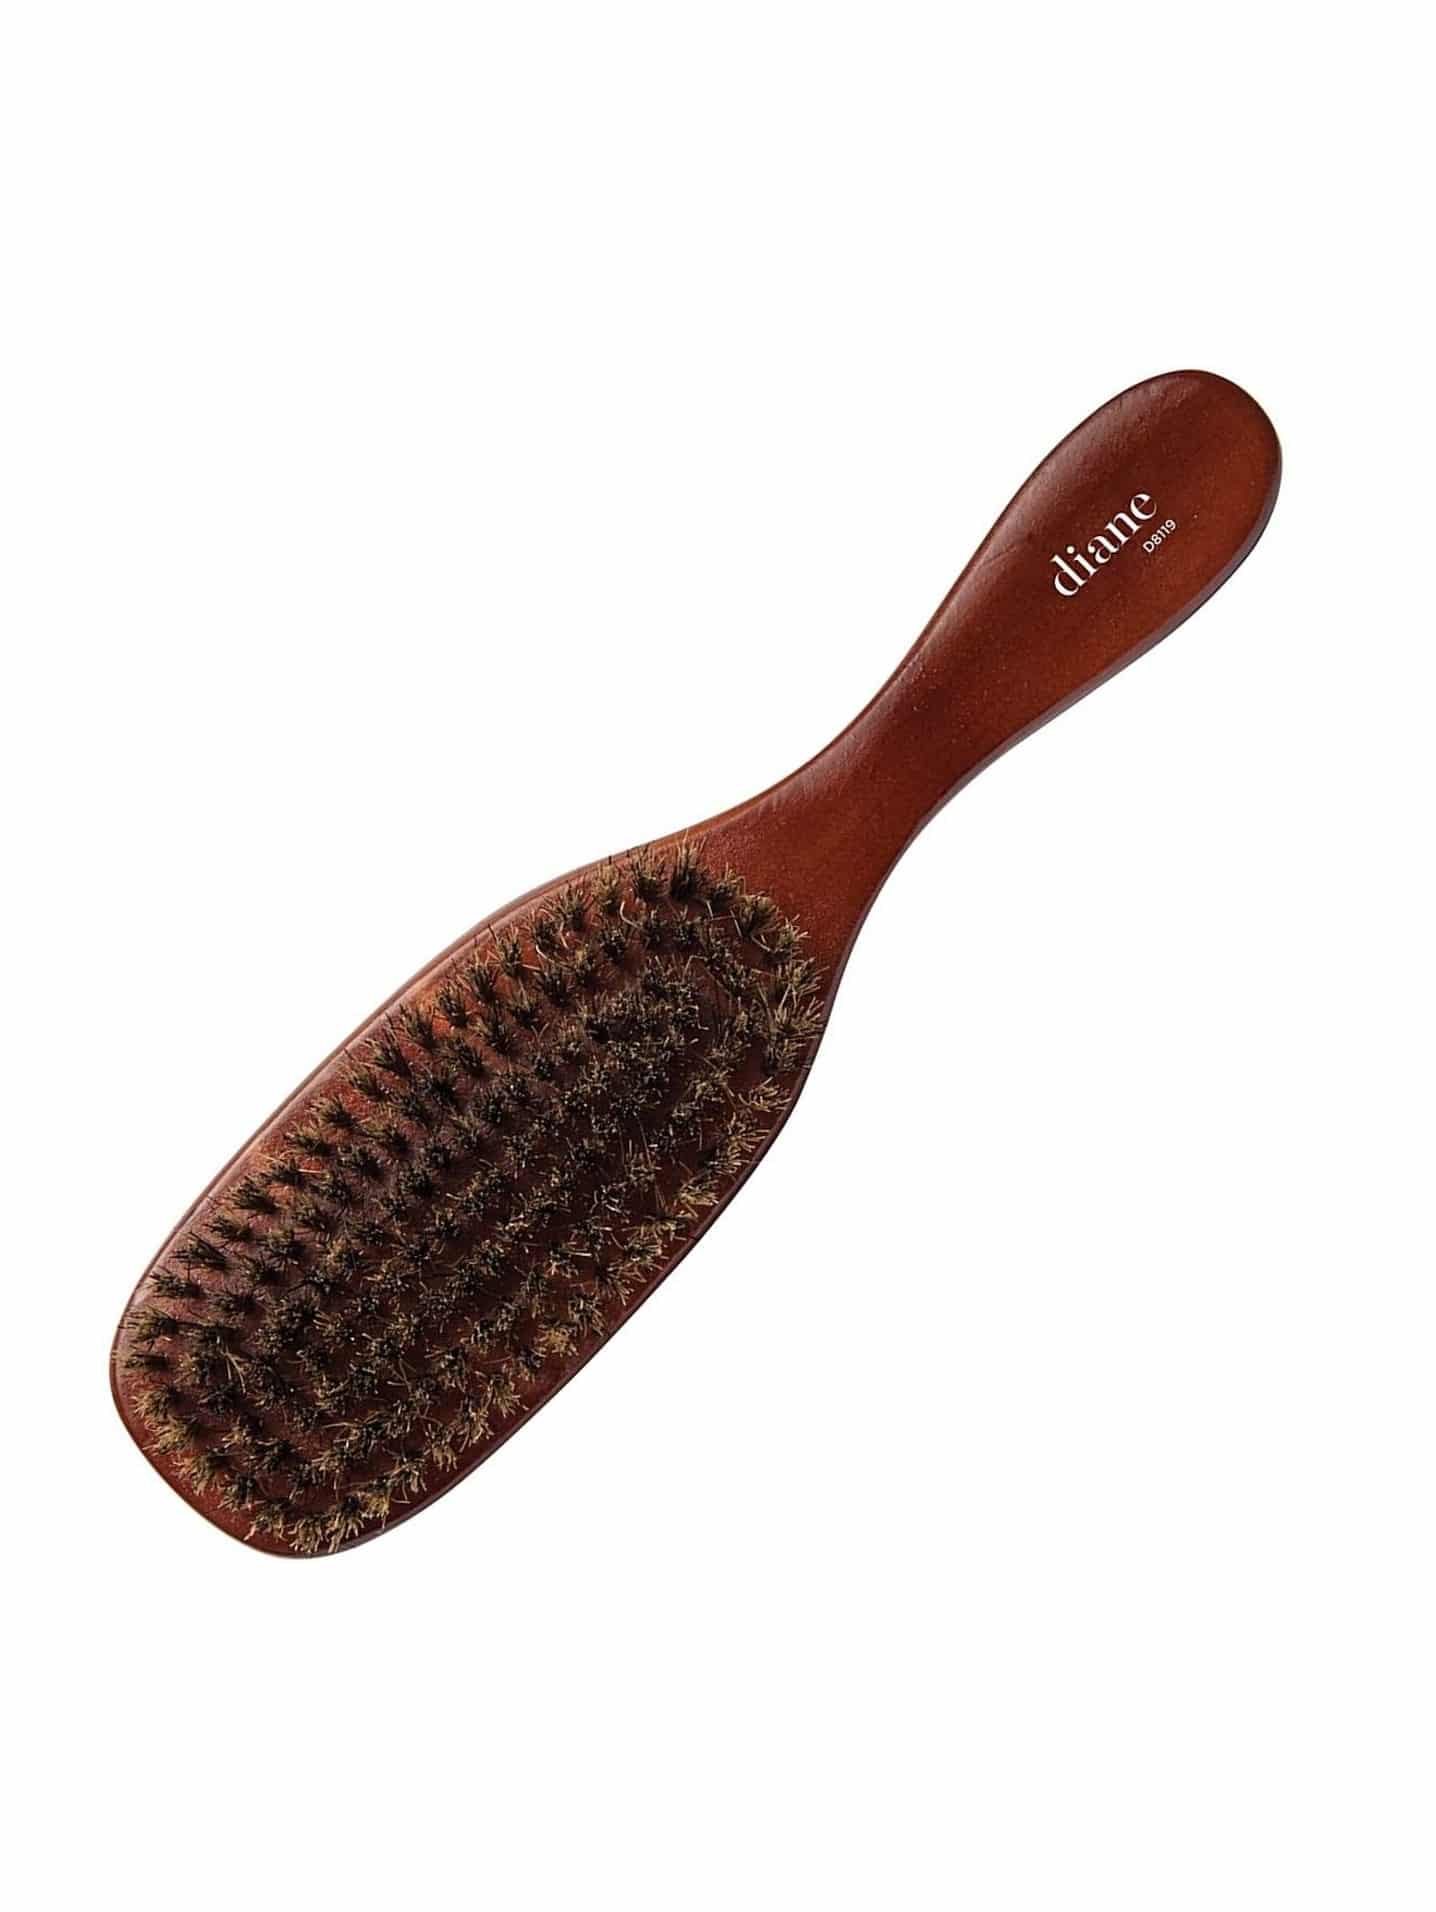 Diane Premium Boar Bristle Brush for Men Double Sided, Medium and